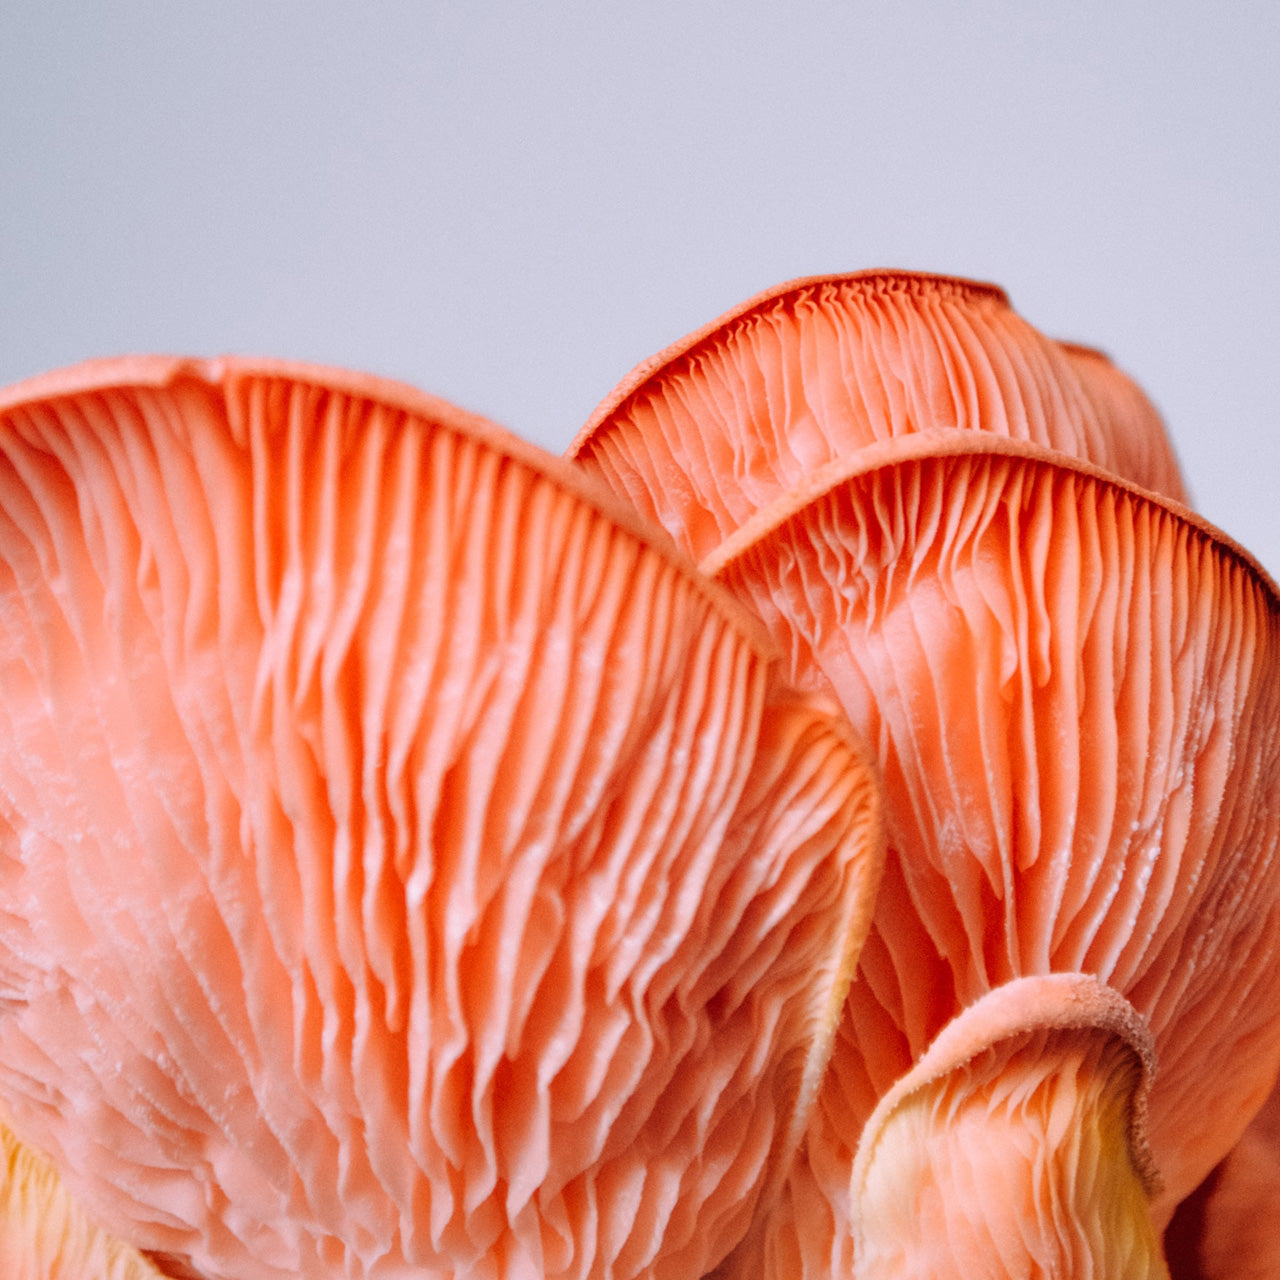 Is mushroom leather the future of sustainable fashion?